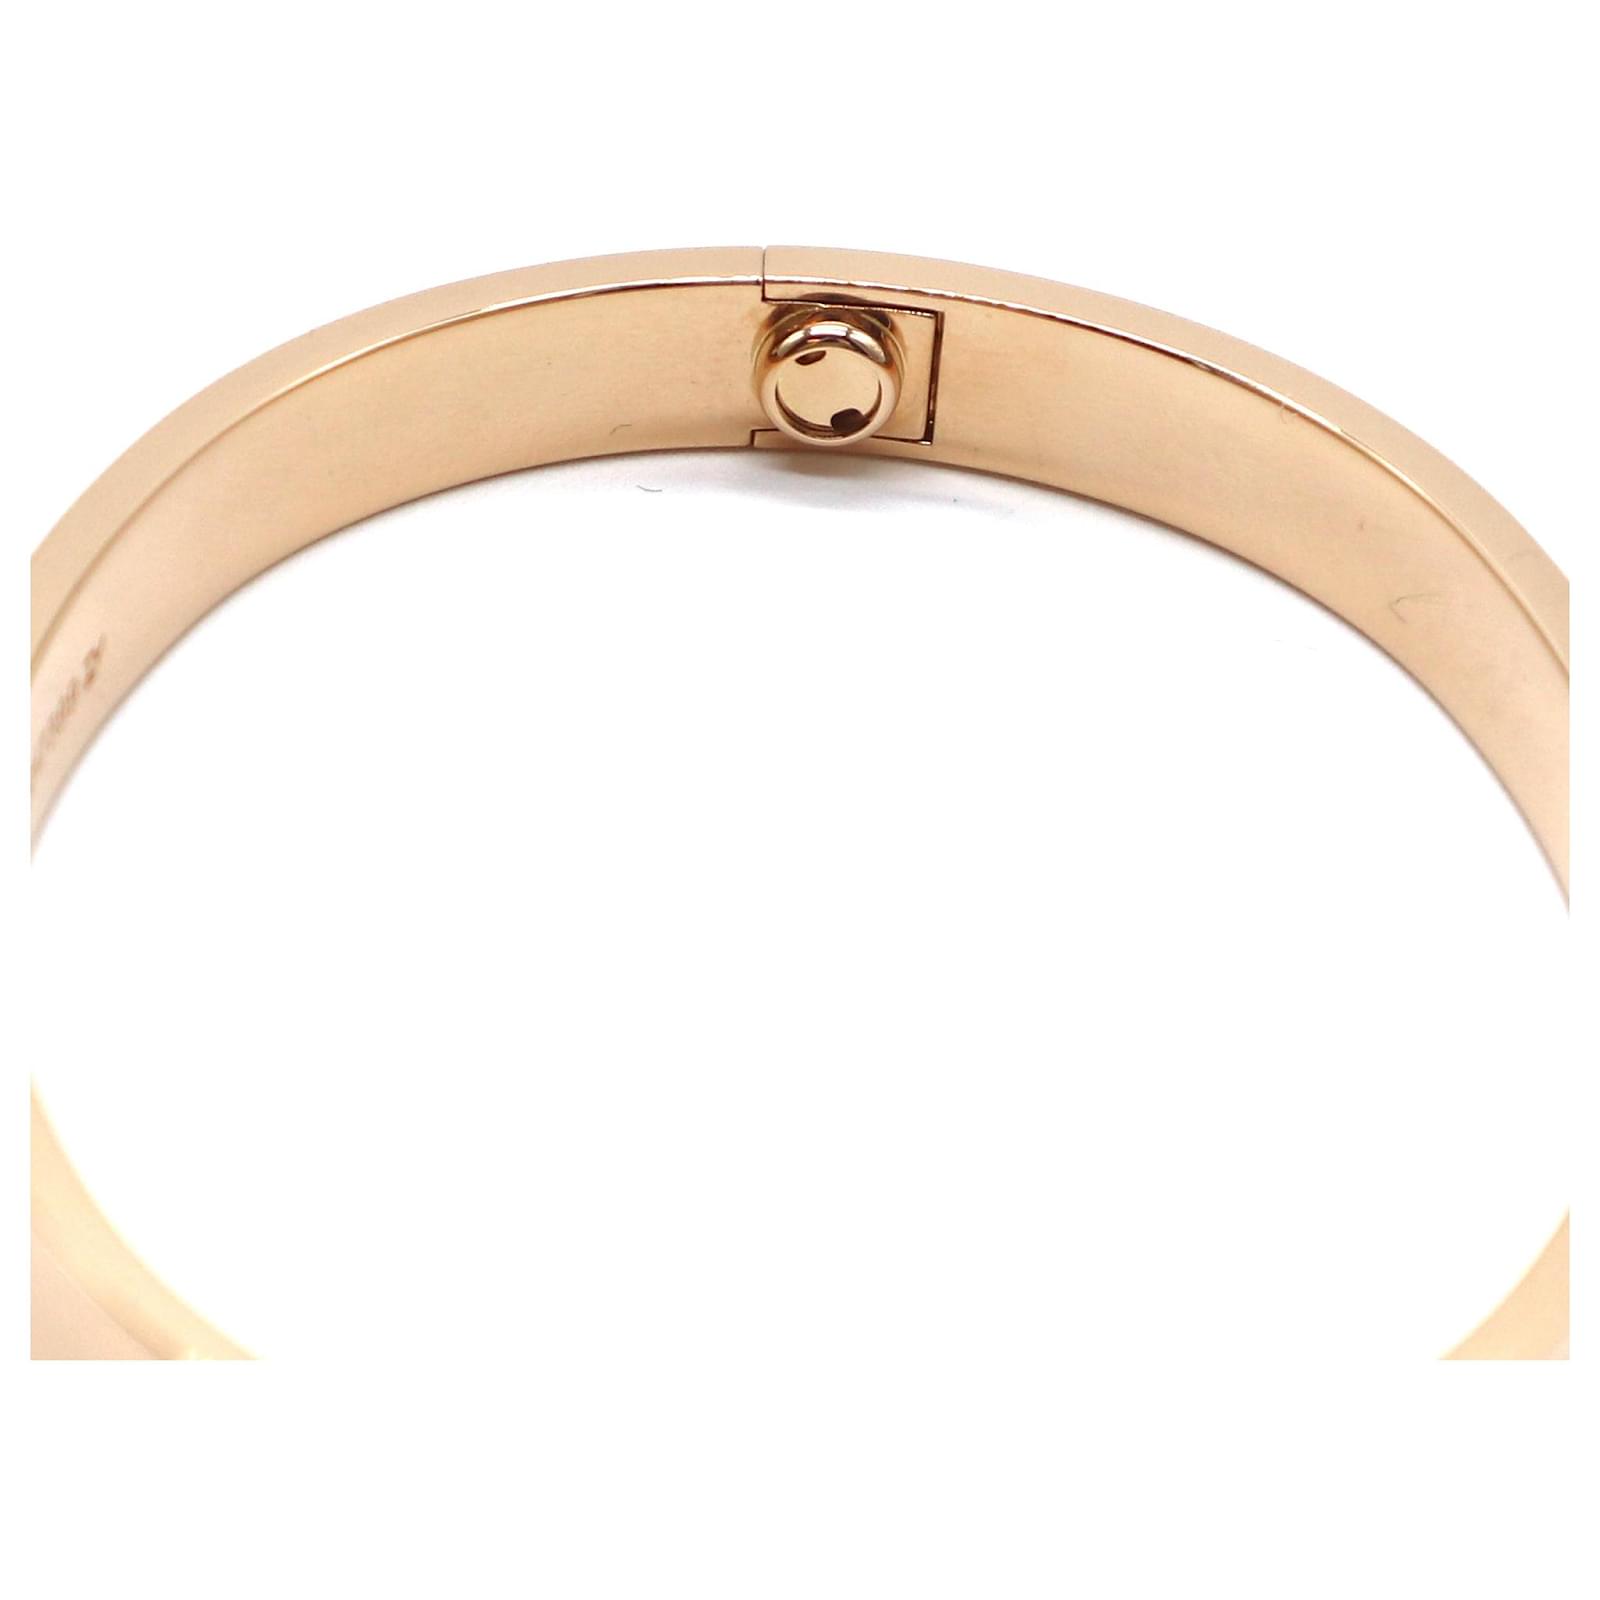 Cartier Love Bracelet Bangle 18K Pink Gold 750 Size16 90193981